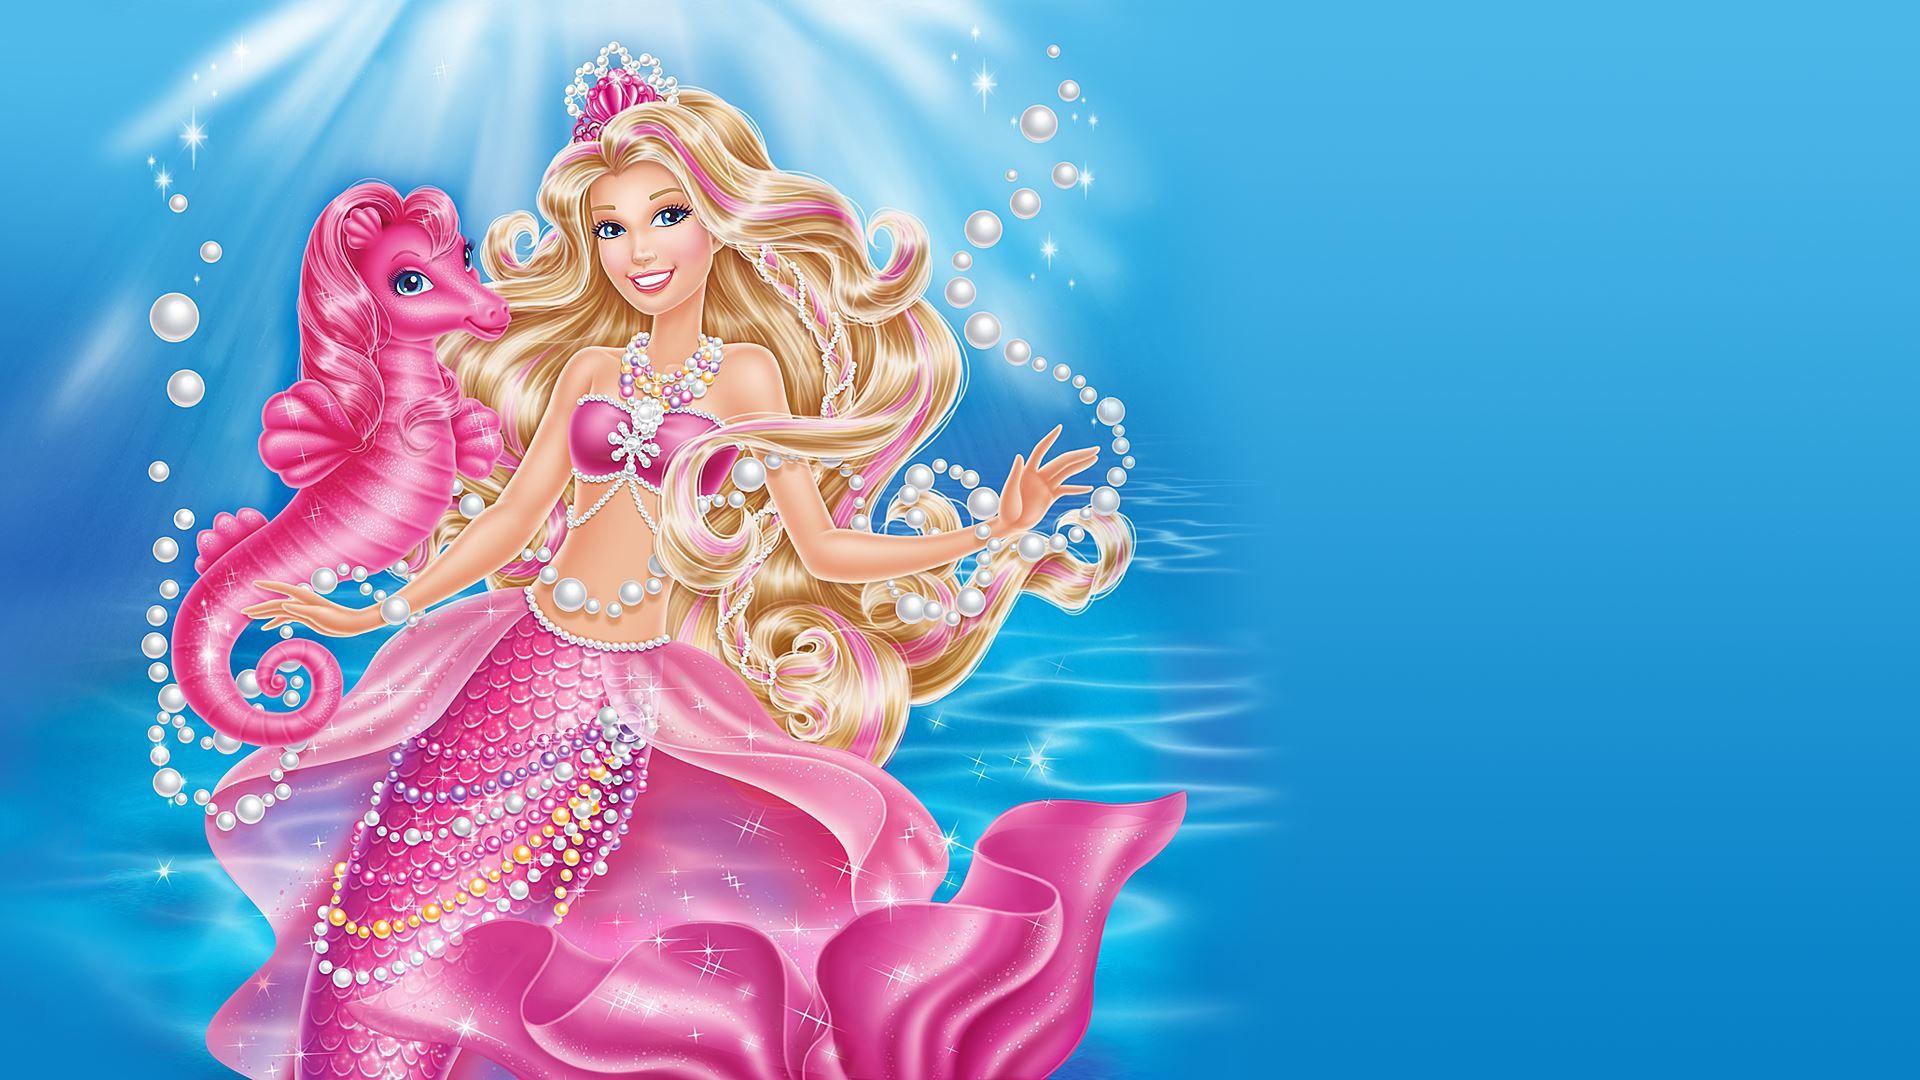 Barbie The Pearl Princess Wallpapers